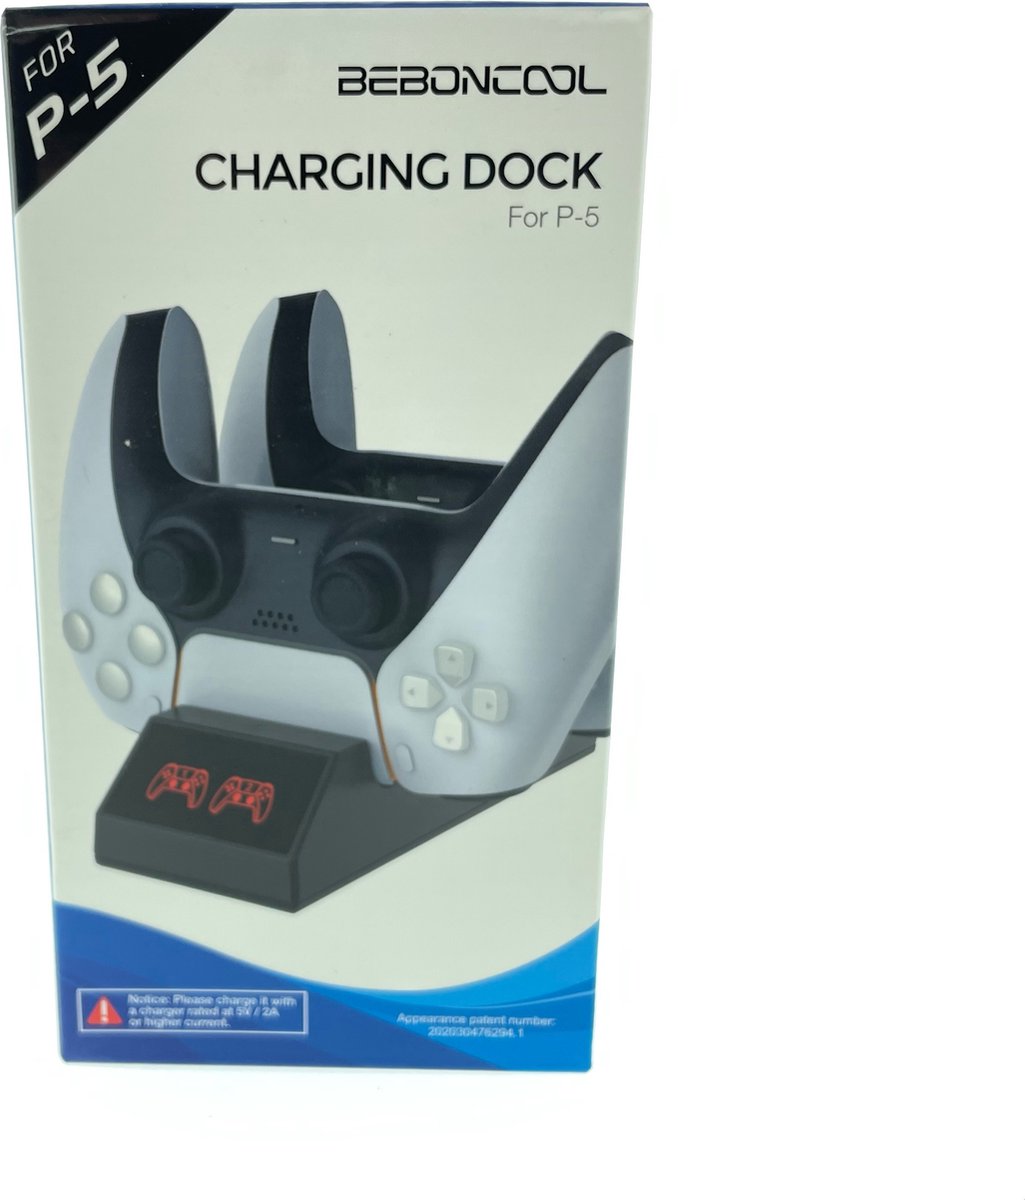 Beboncool PS-5 Charging Dock